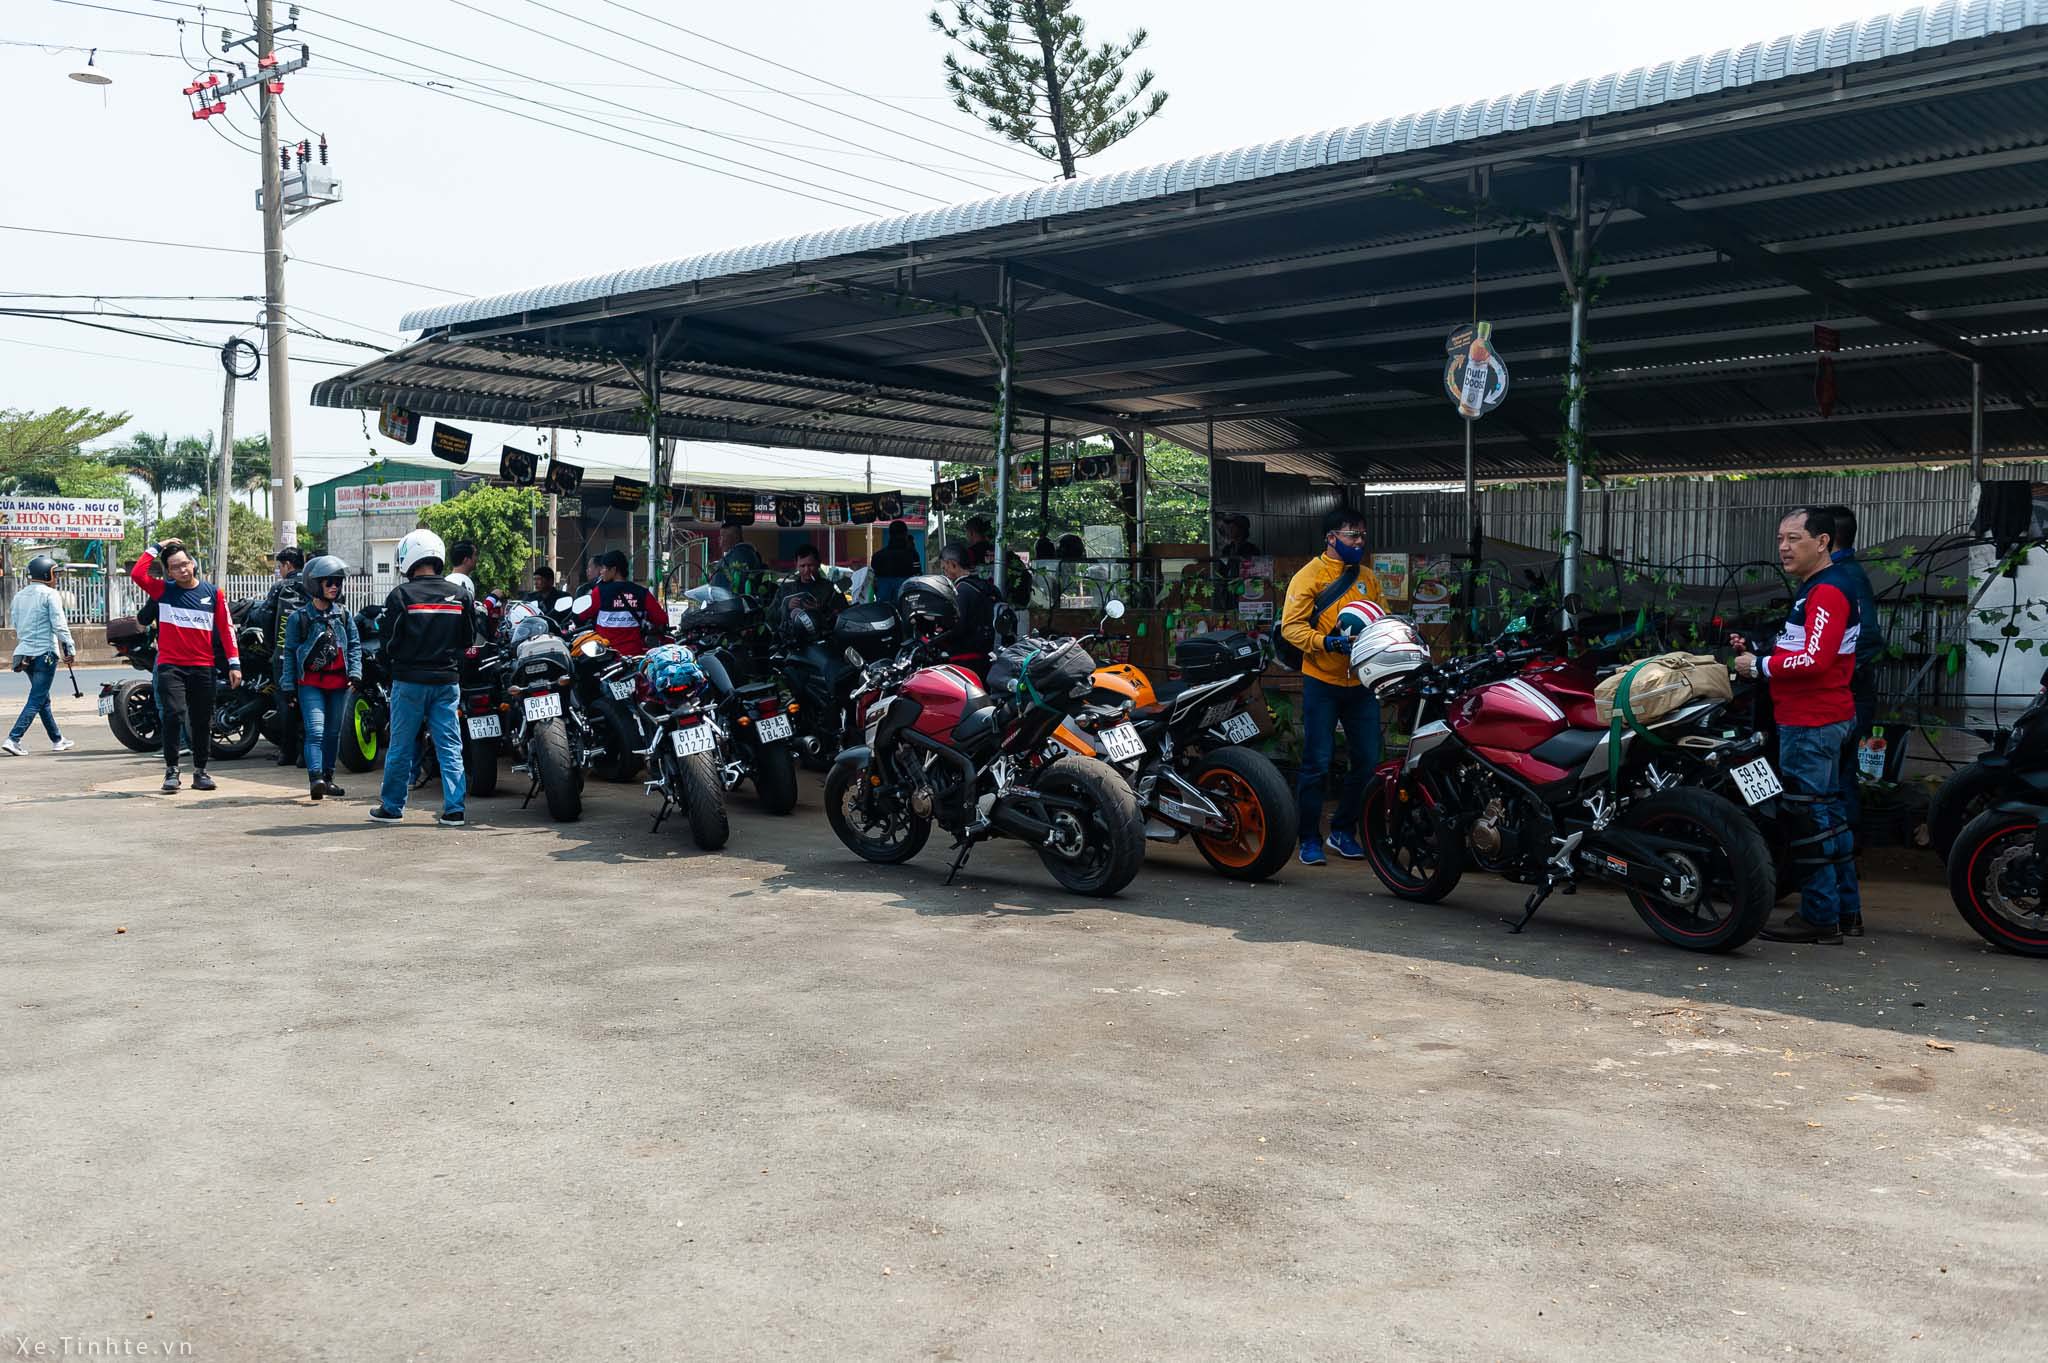 Honda_biker_day_2019_Saigon_Phanthiet (47).jpg